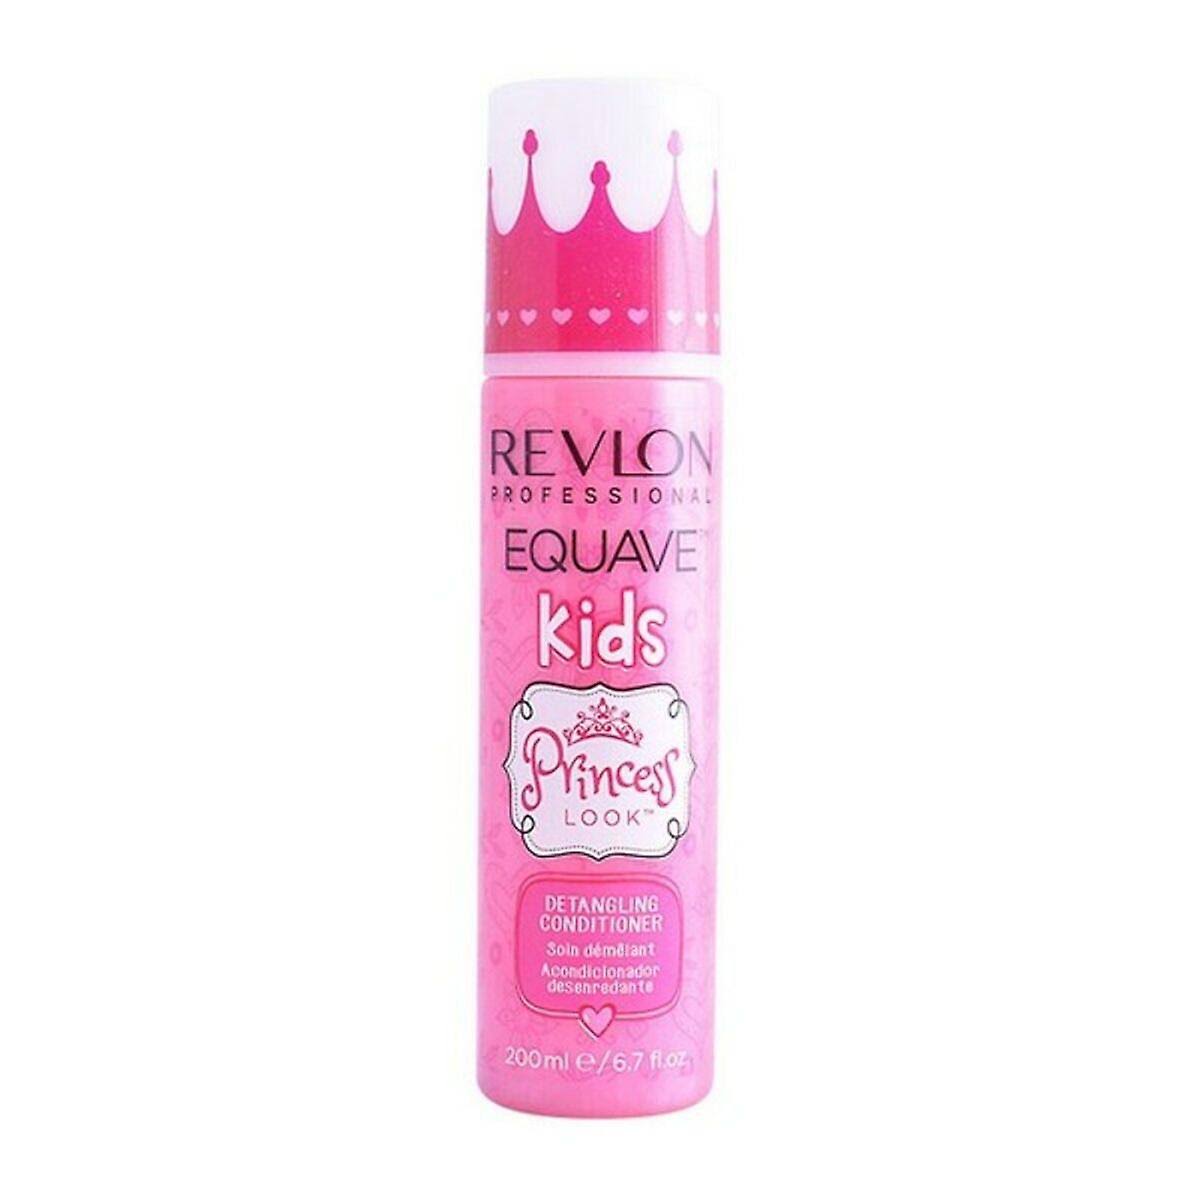 Revlon Equave For Kids Princess Conditioner - 200ml